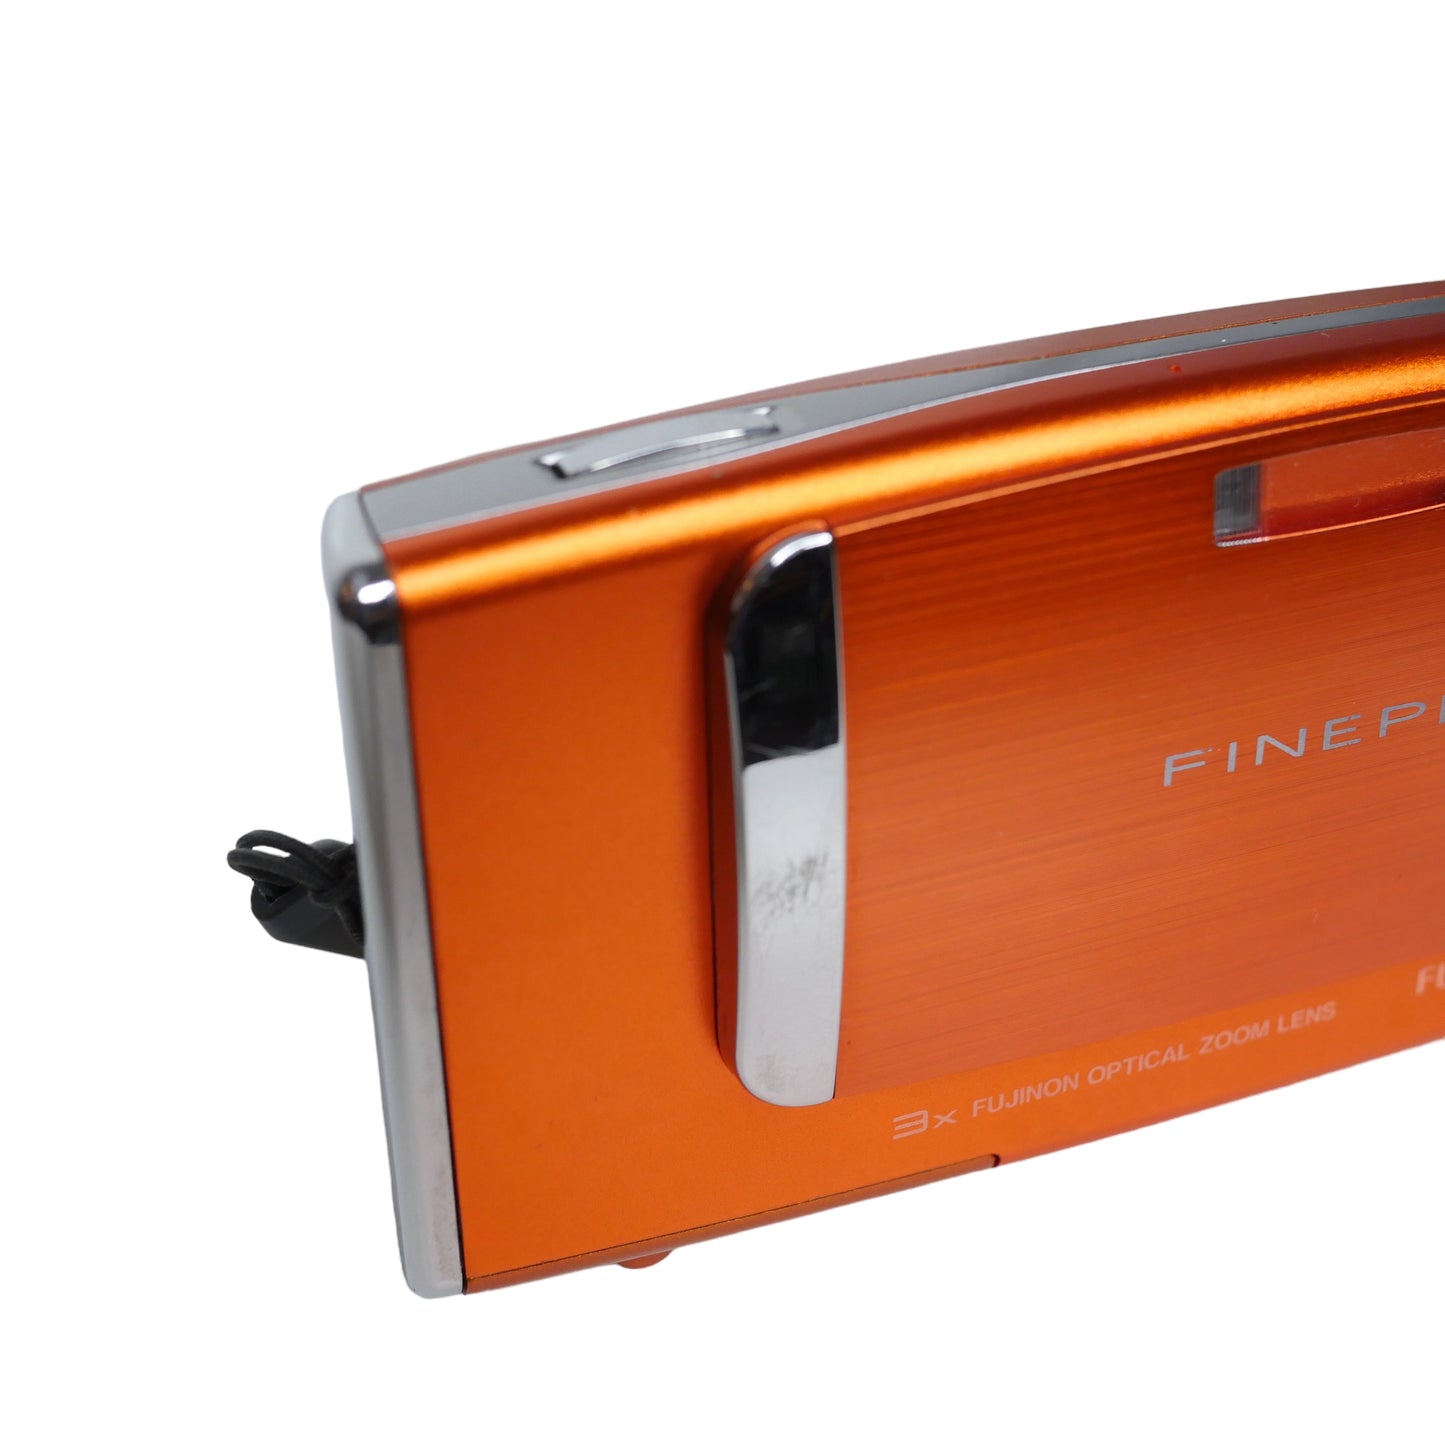 Fujifilm Finepix Z10 7.2 Megapixel Camera